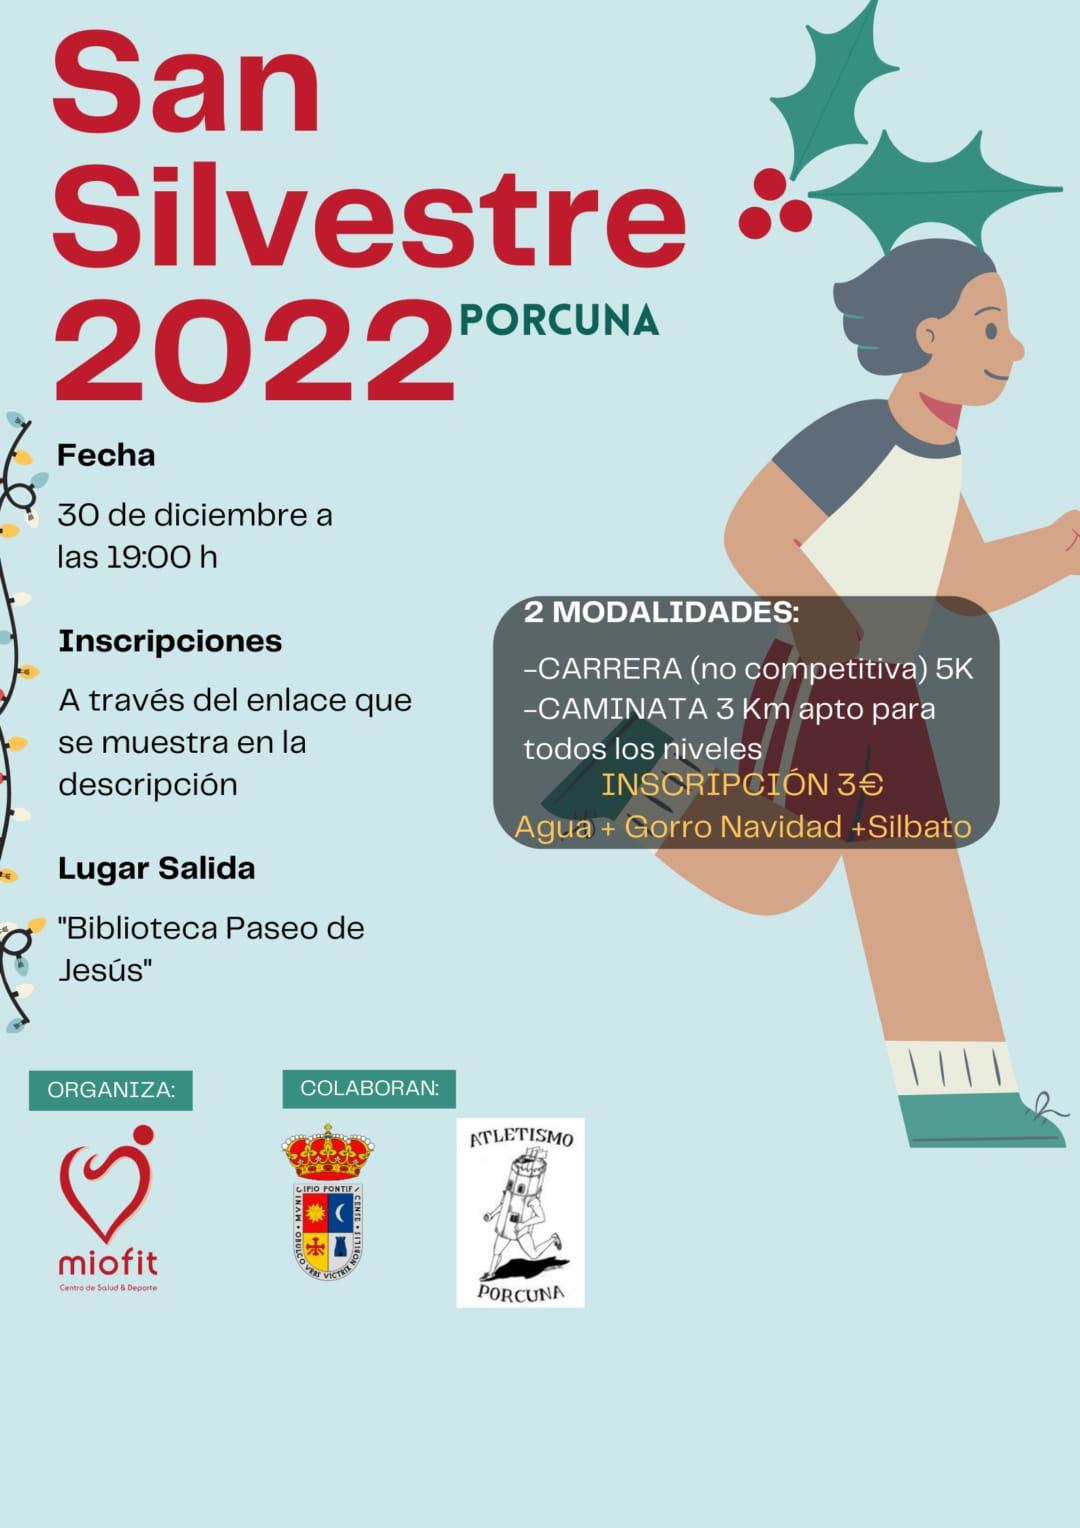 San Silvestre 2022